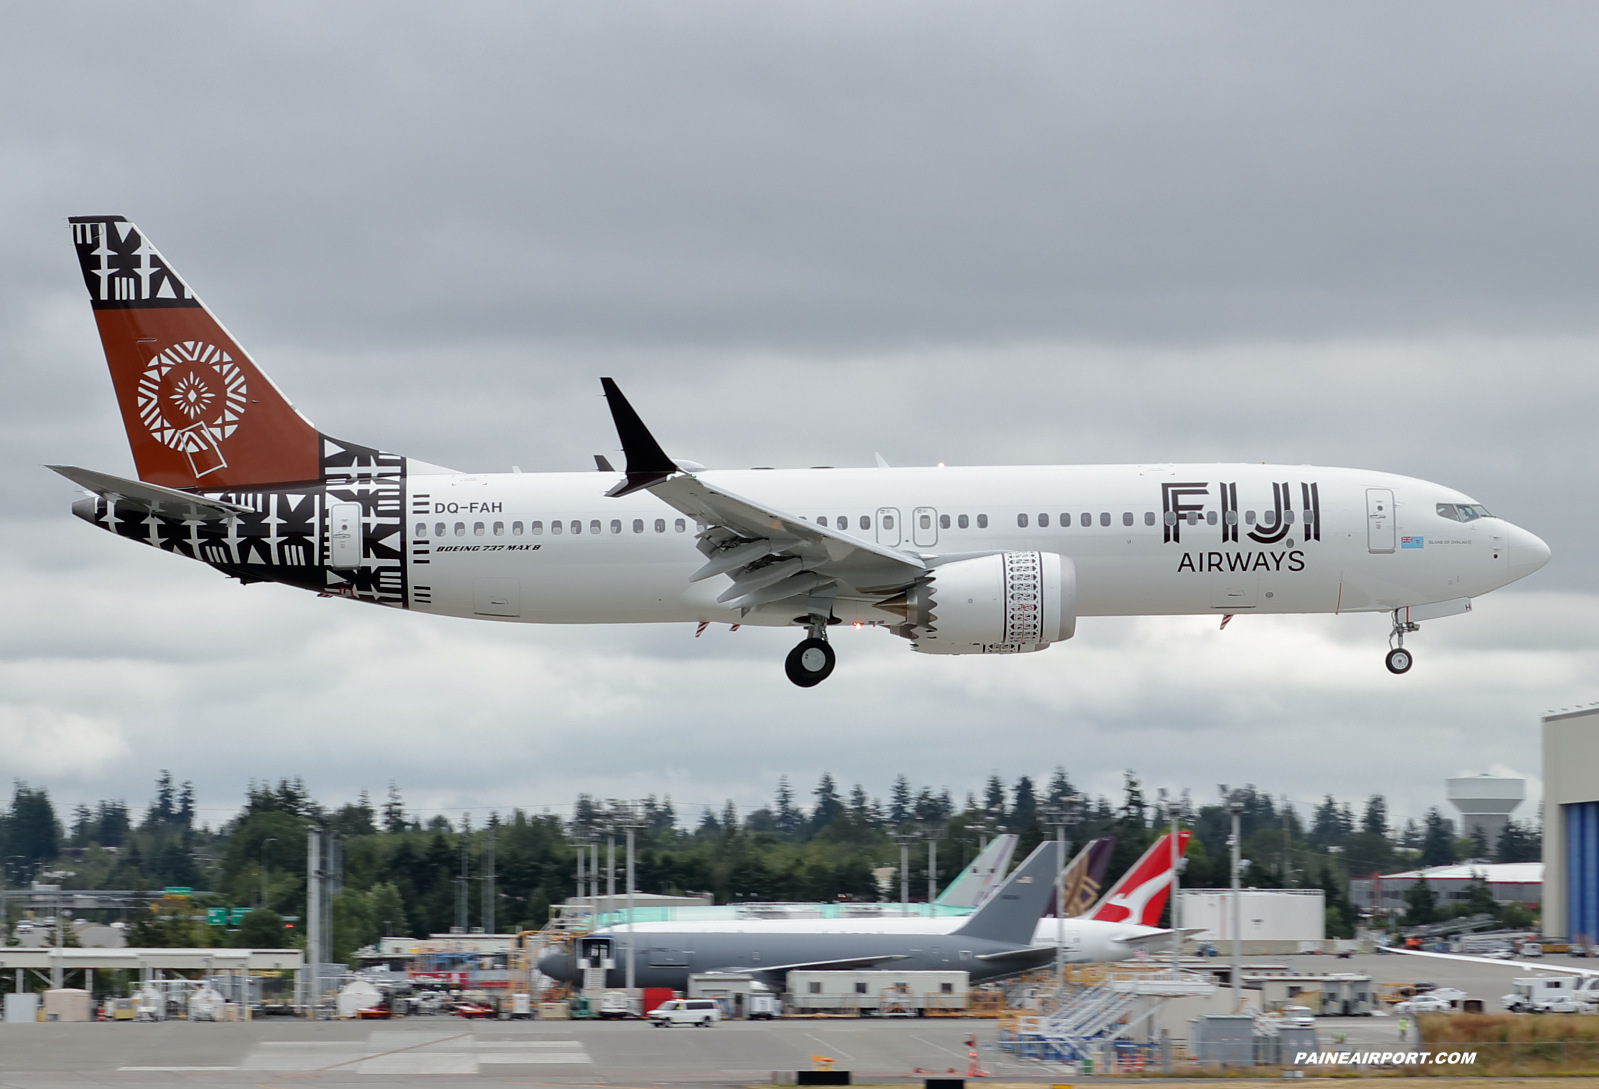 Fiji Airways 737 DQ-FAH at KPAE Paine Field